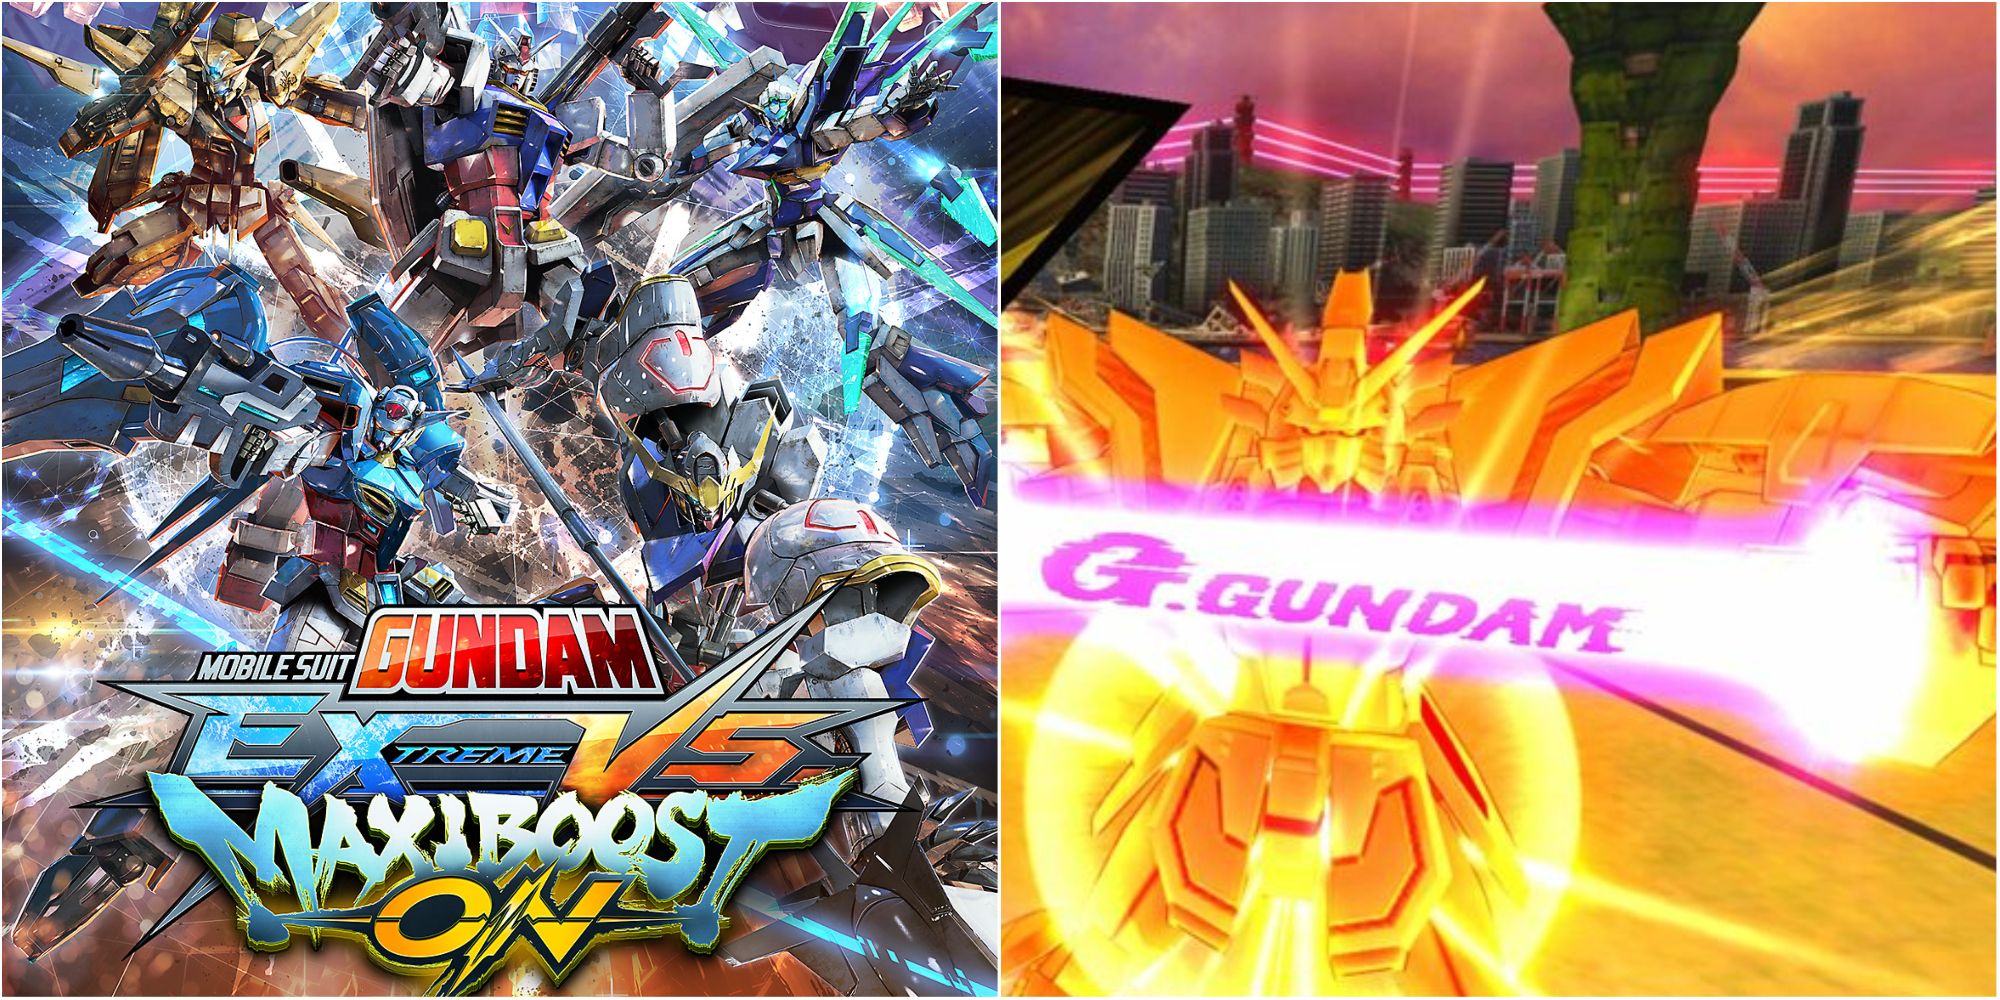 gundam extreme vs maxiboost on cover art and gameplay